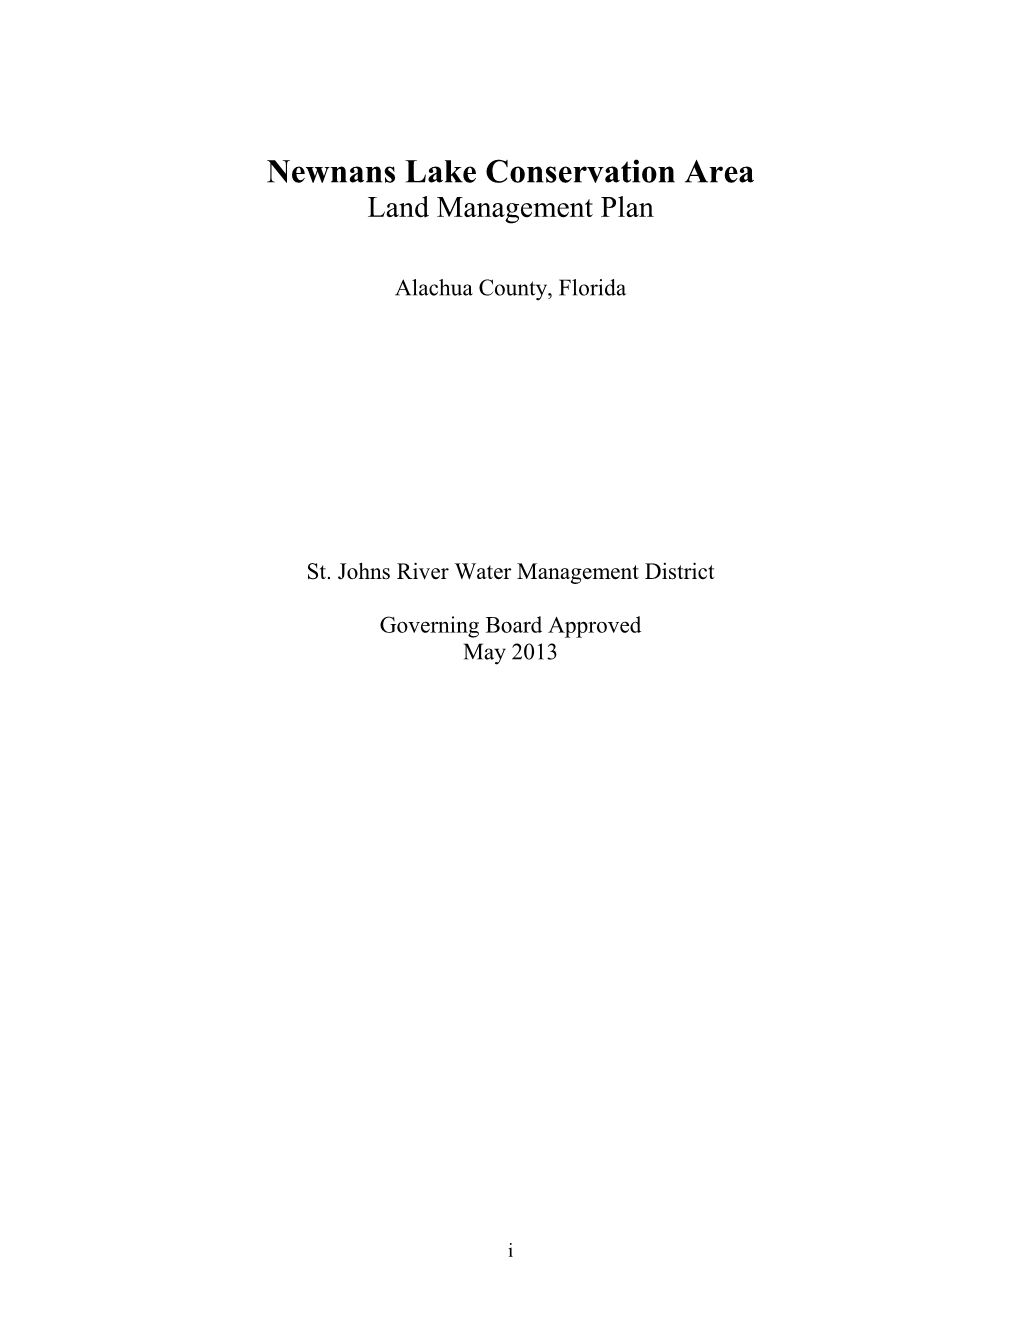 Newnans Lake Conservation Area Land Management Plan